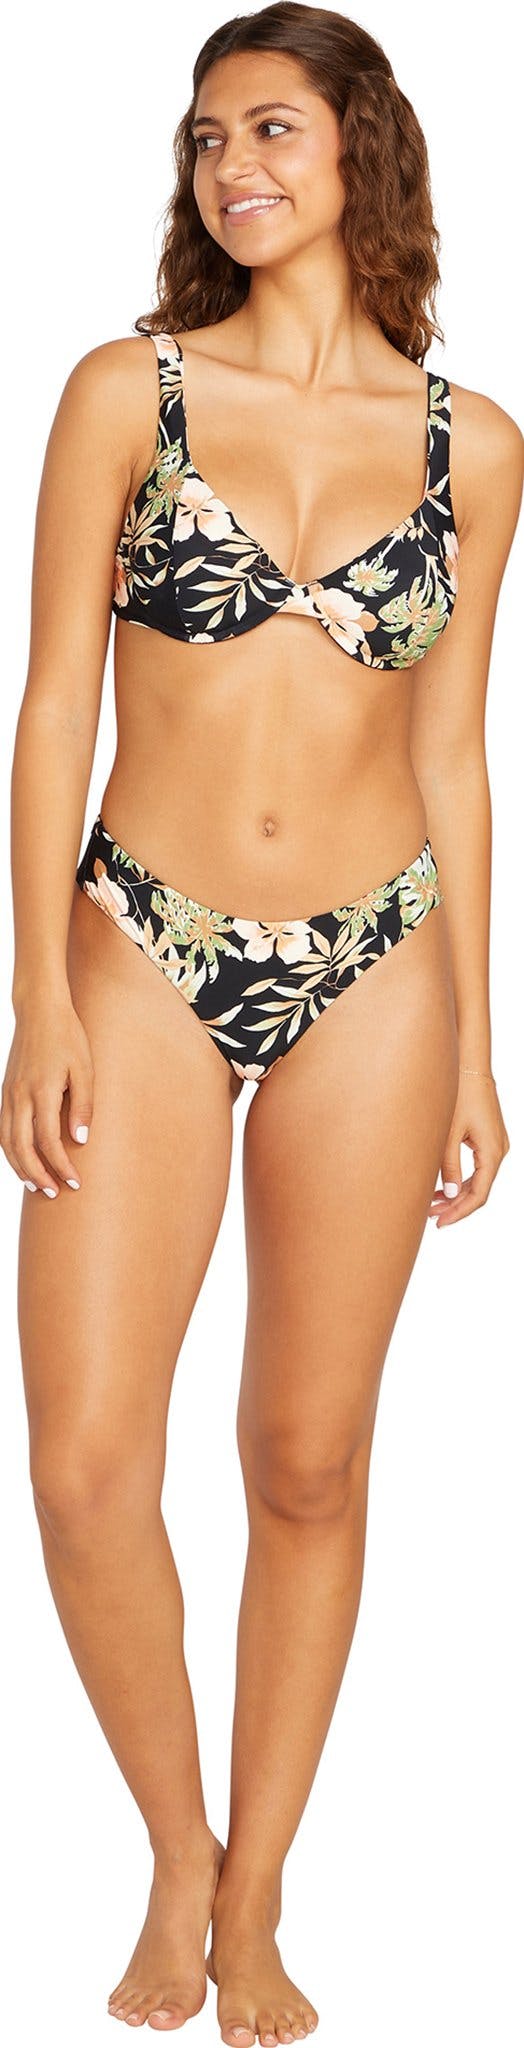 Product image for For The Tide Cheekini Bikini Bottom - Women's